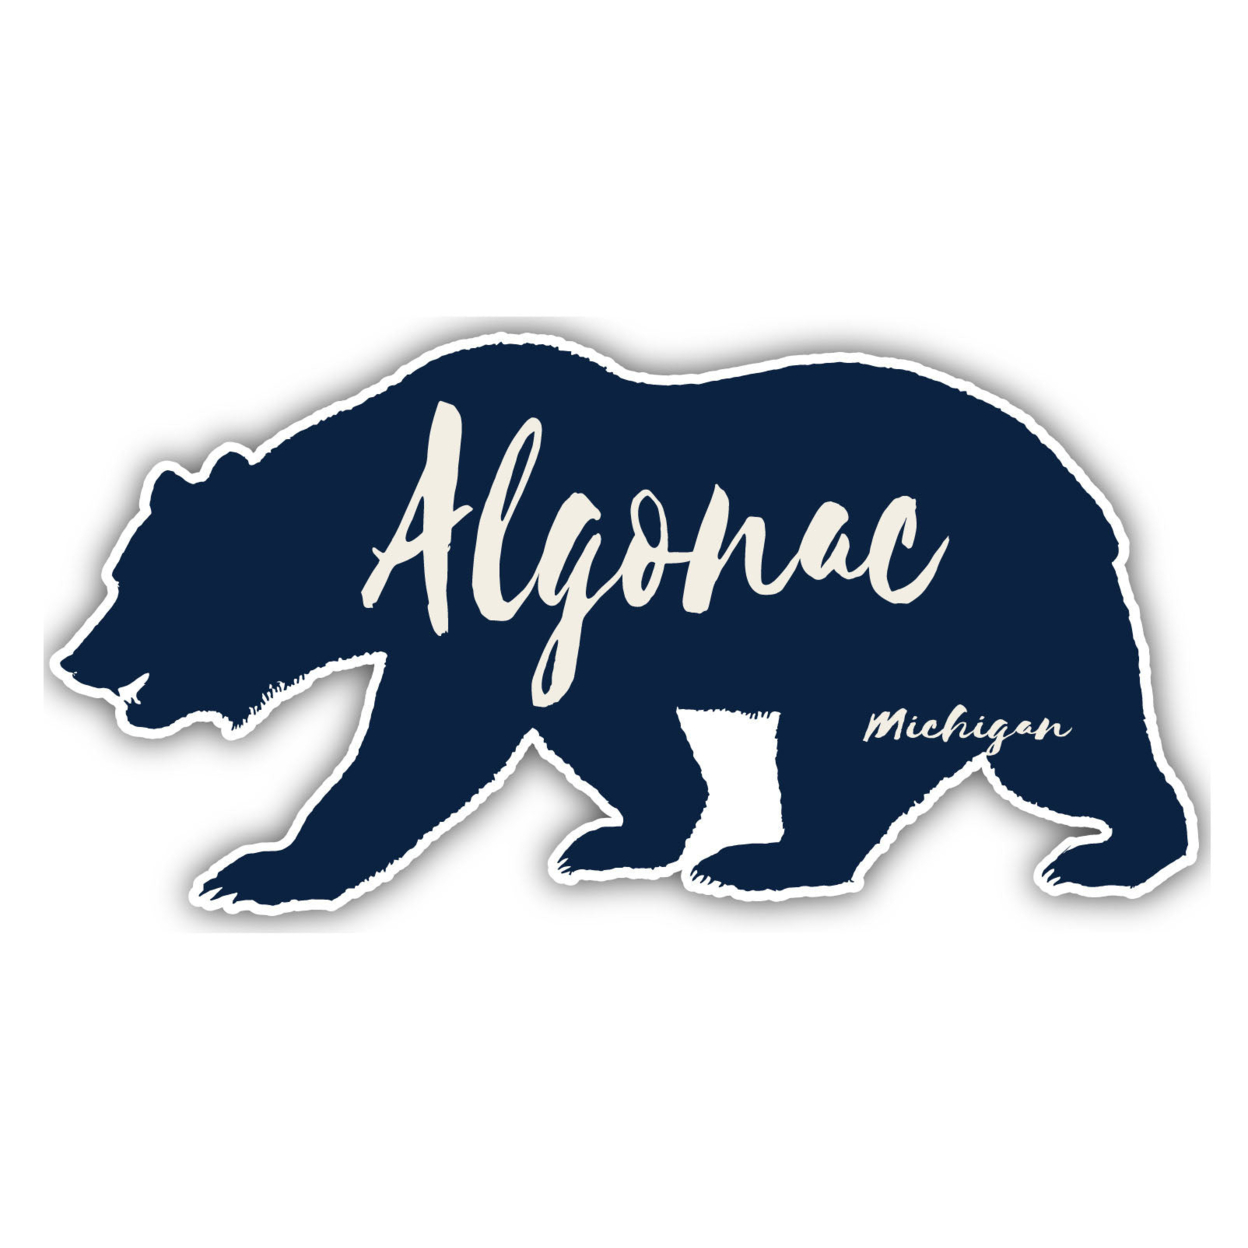 Algonac Michigan Souvenir Decorative Stickers (Choose Theme And Size) - Single Unit, 12-Inch, Bear